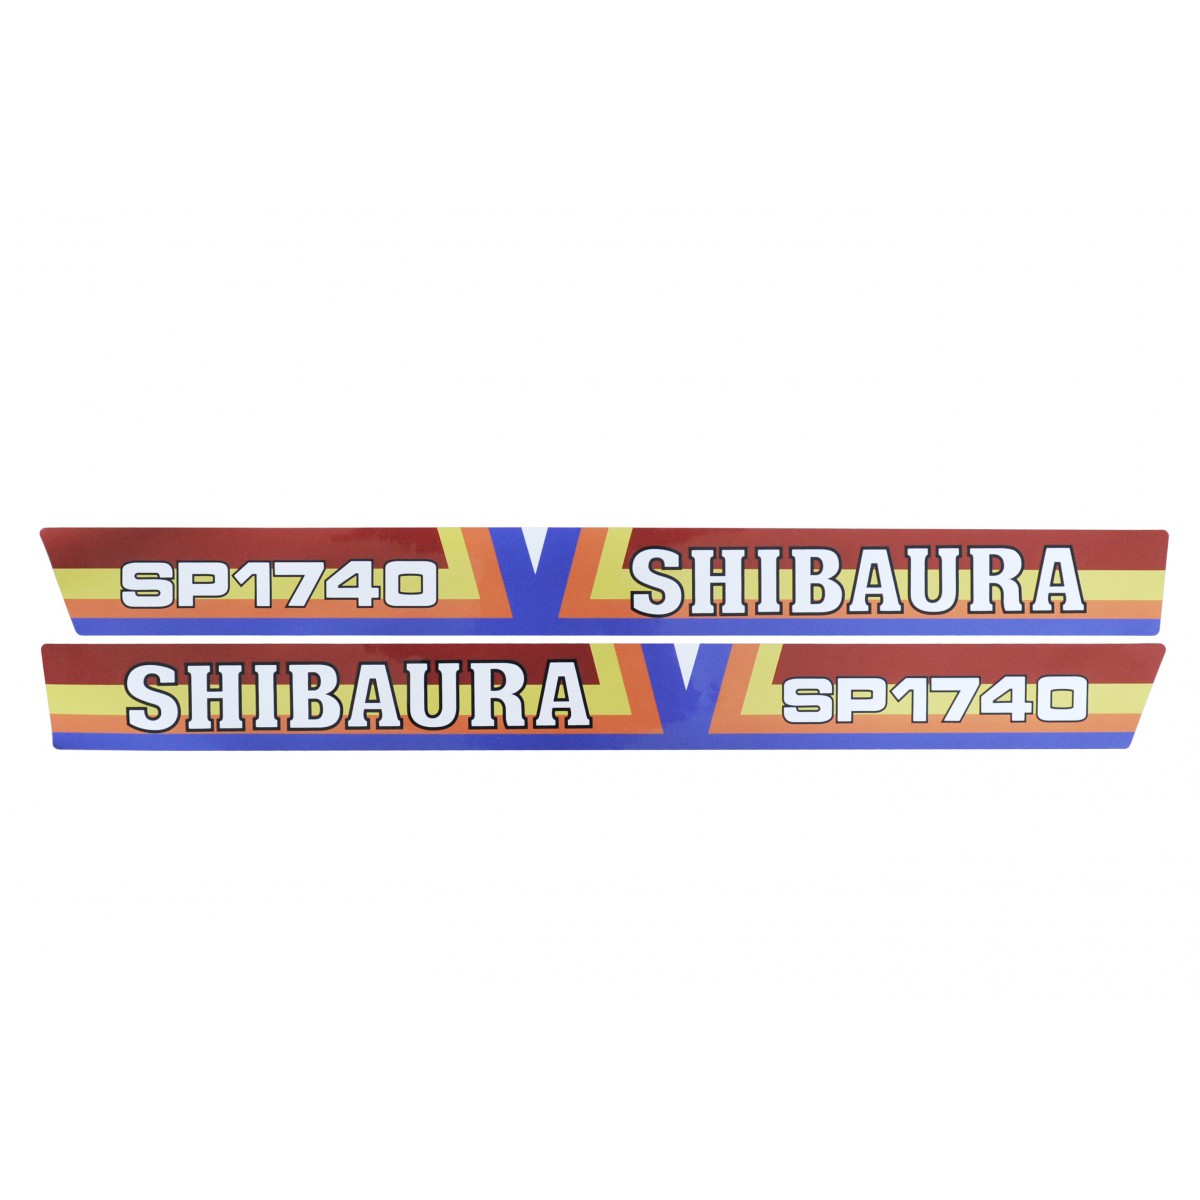 Shibaura Stickers SP1740